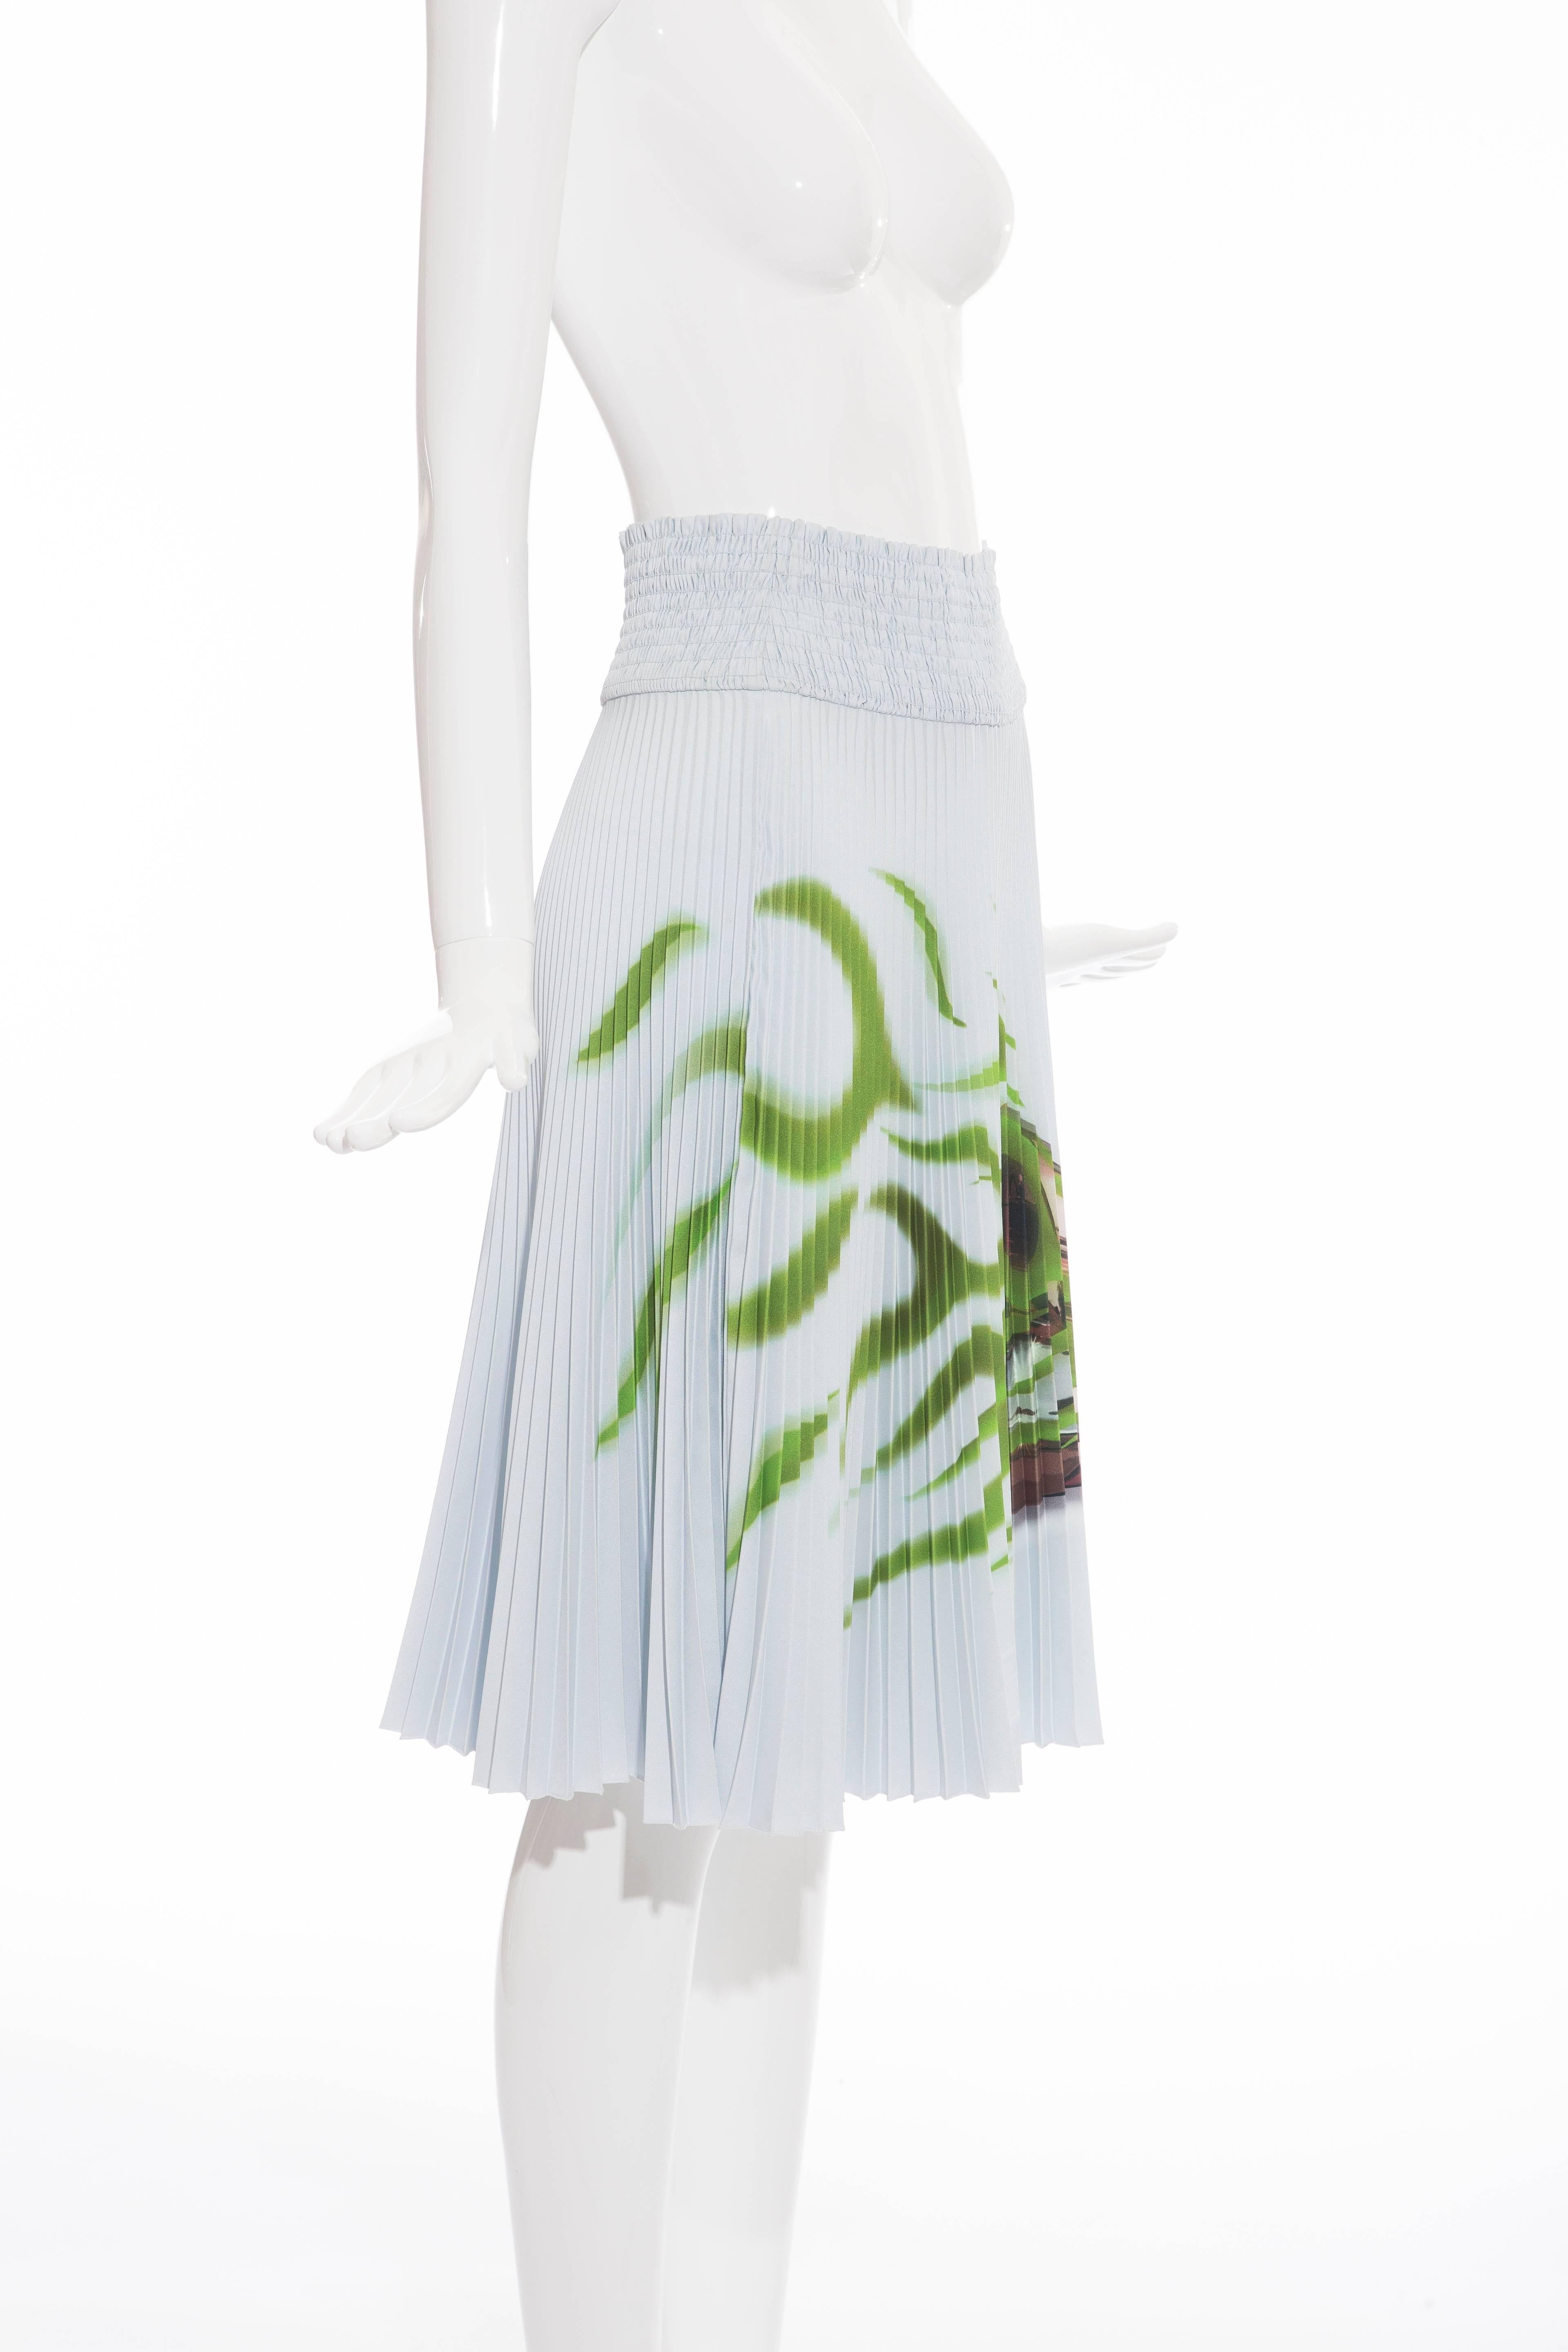 Gray Prada Runway Accordion Pleated Cadillac Car Print Skirt, Spring 2012